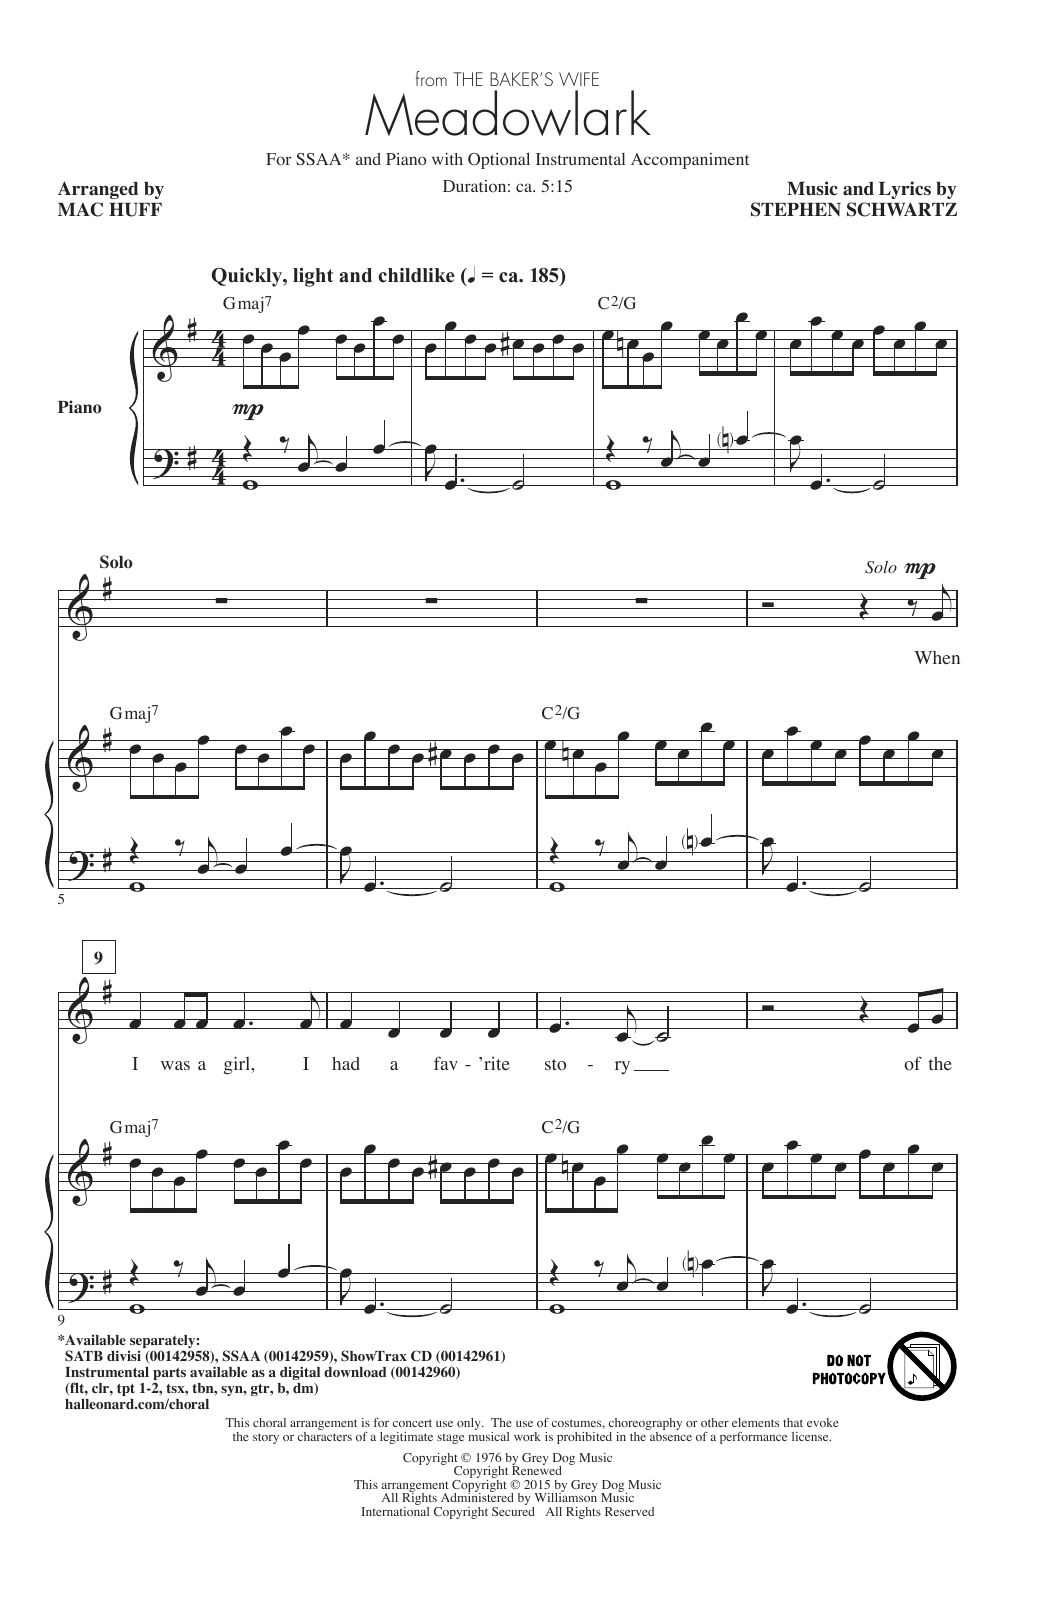 Stephen Schwartz Meadowlark (Arr. Mac Huff) Sheet Music Notes & Chords for SATB - Download or Print PDF